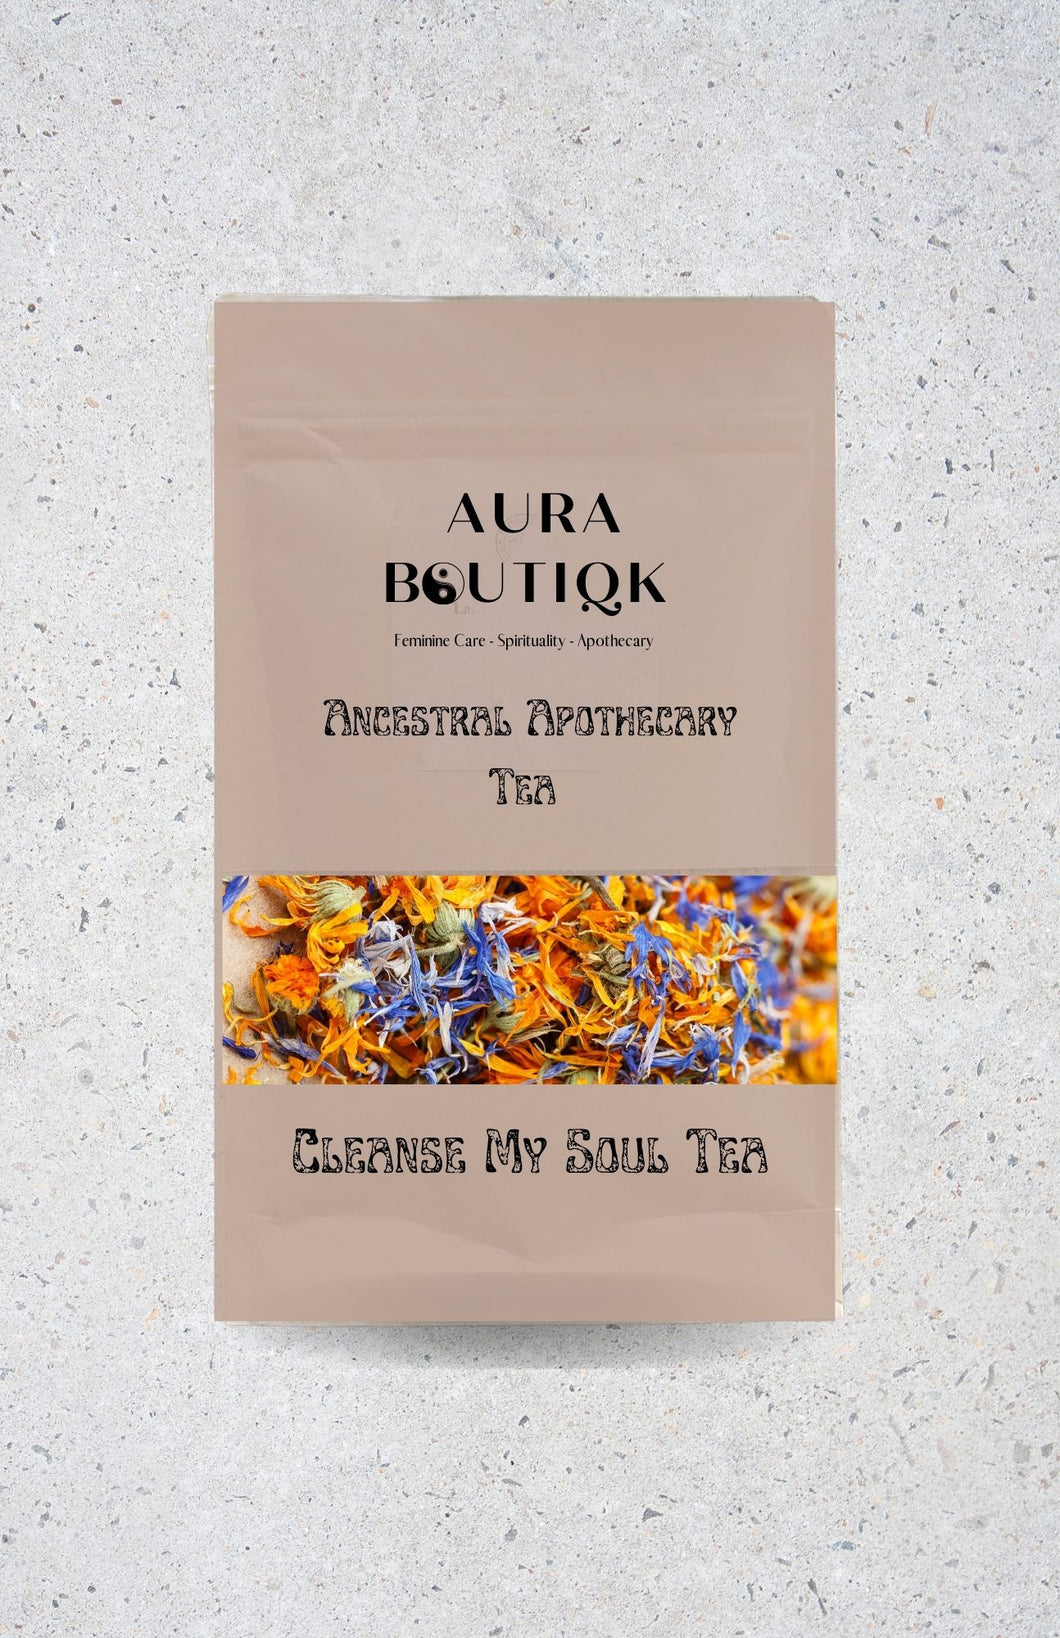 CLEANSE MY SOUL TEA - Aura Boutiqk